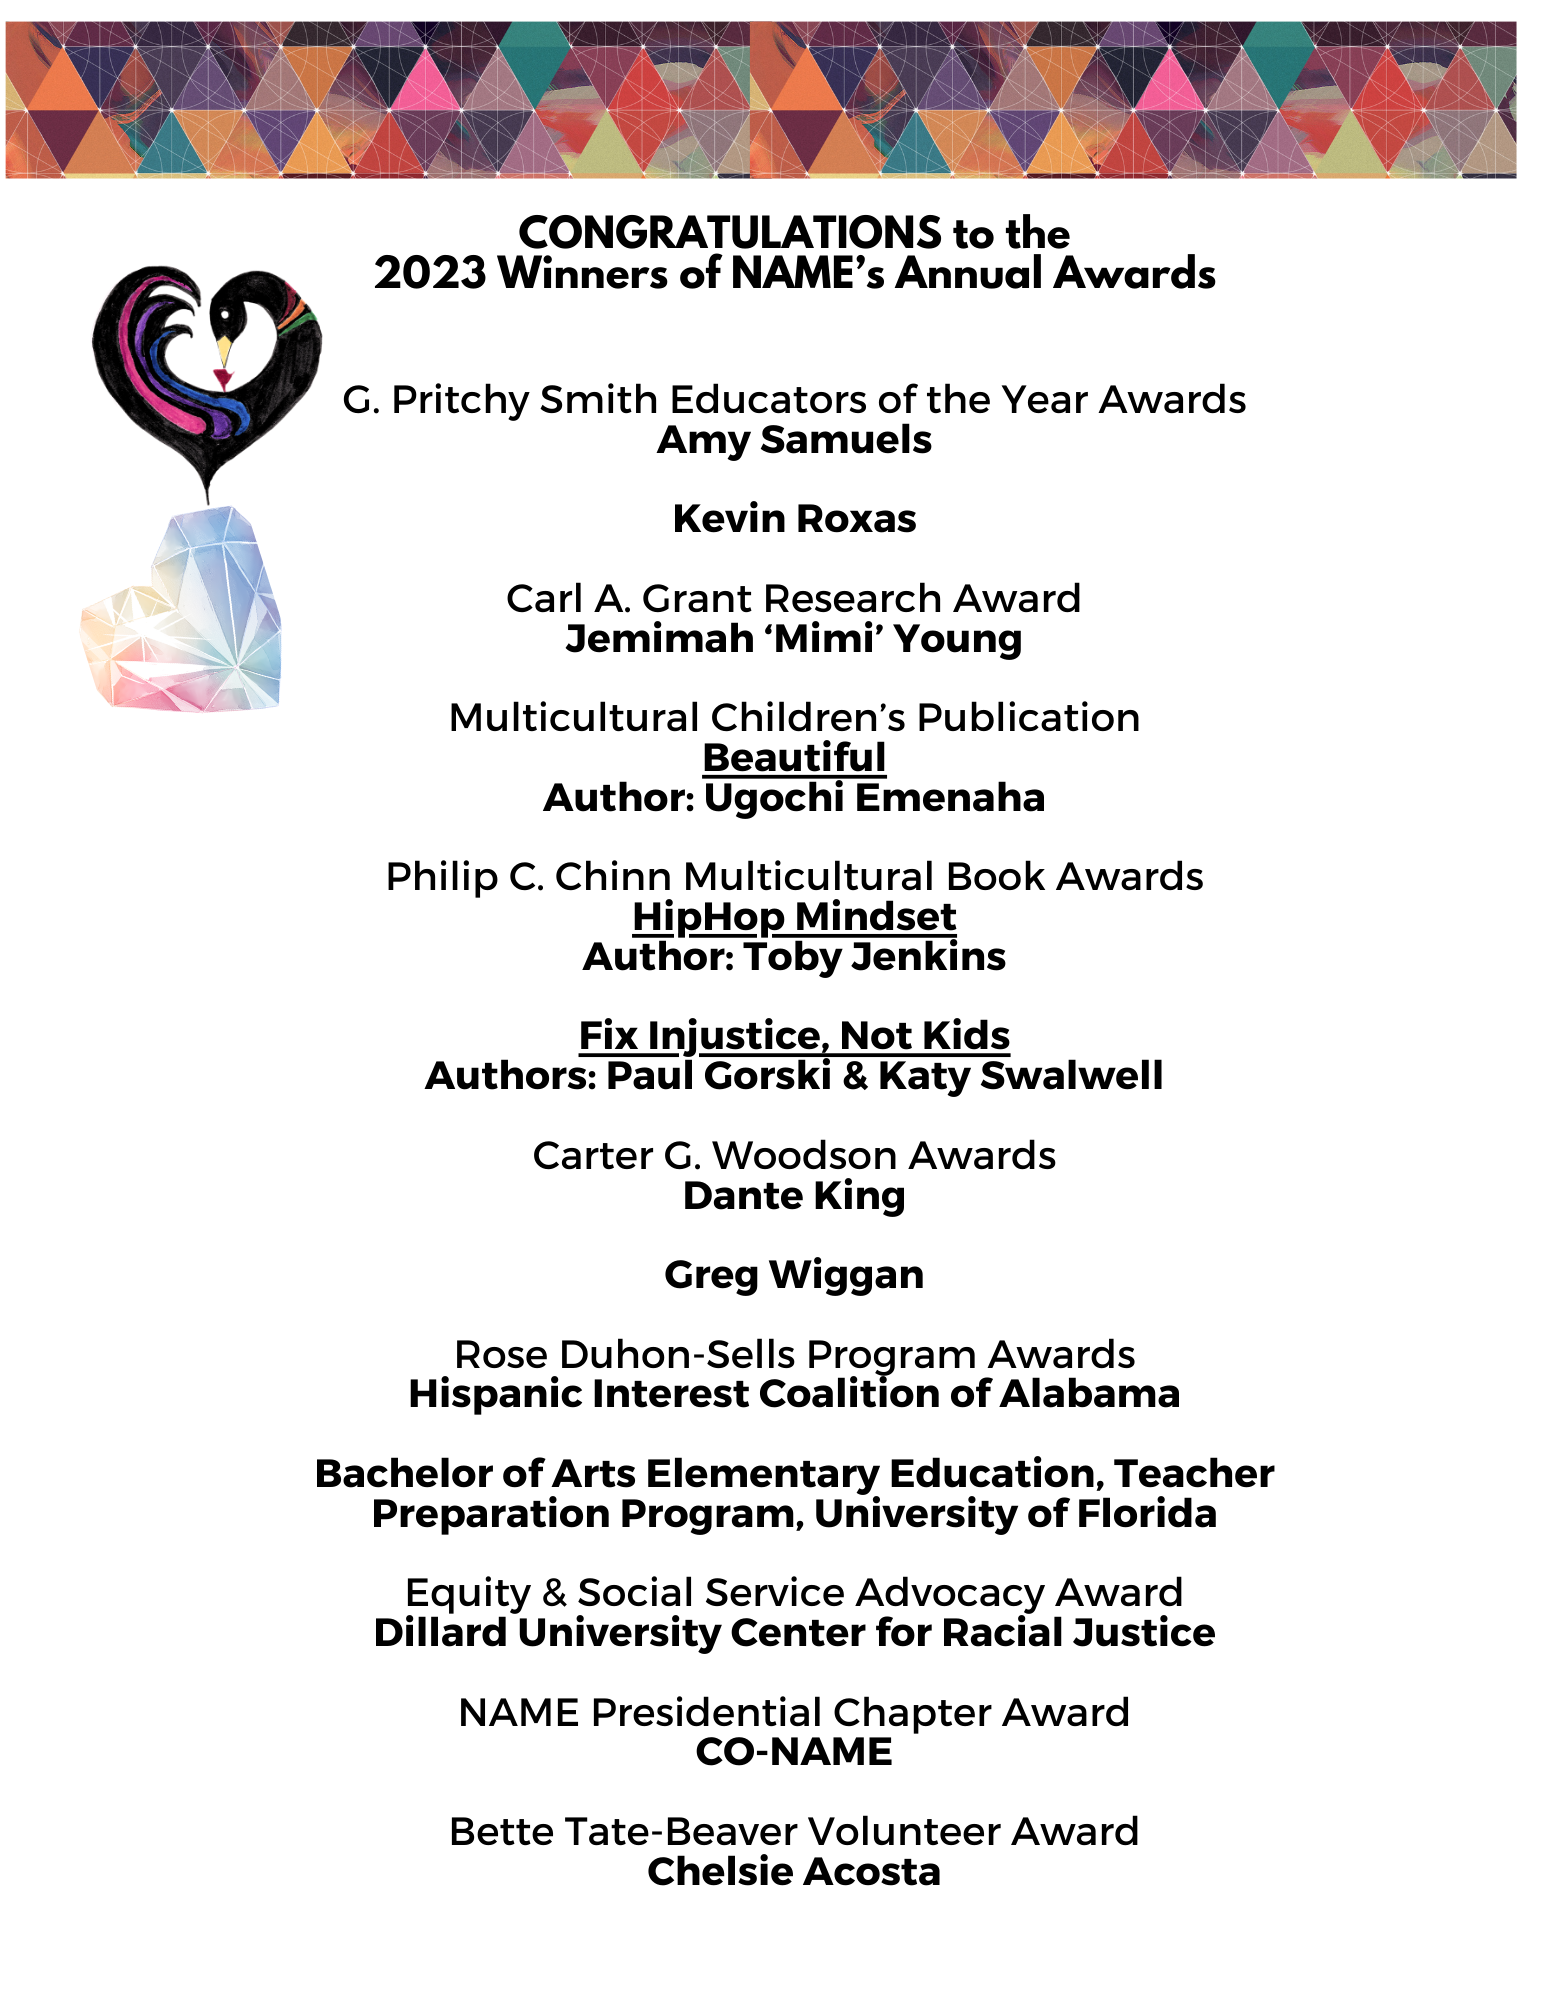 Awards Category Details